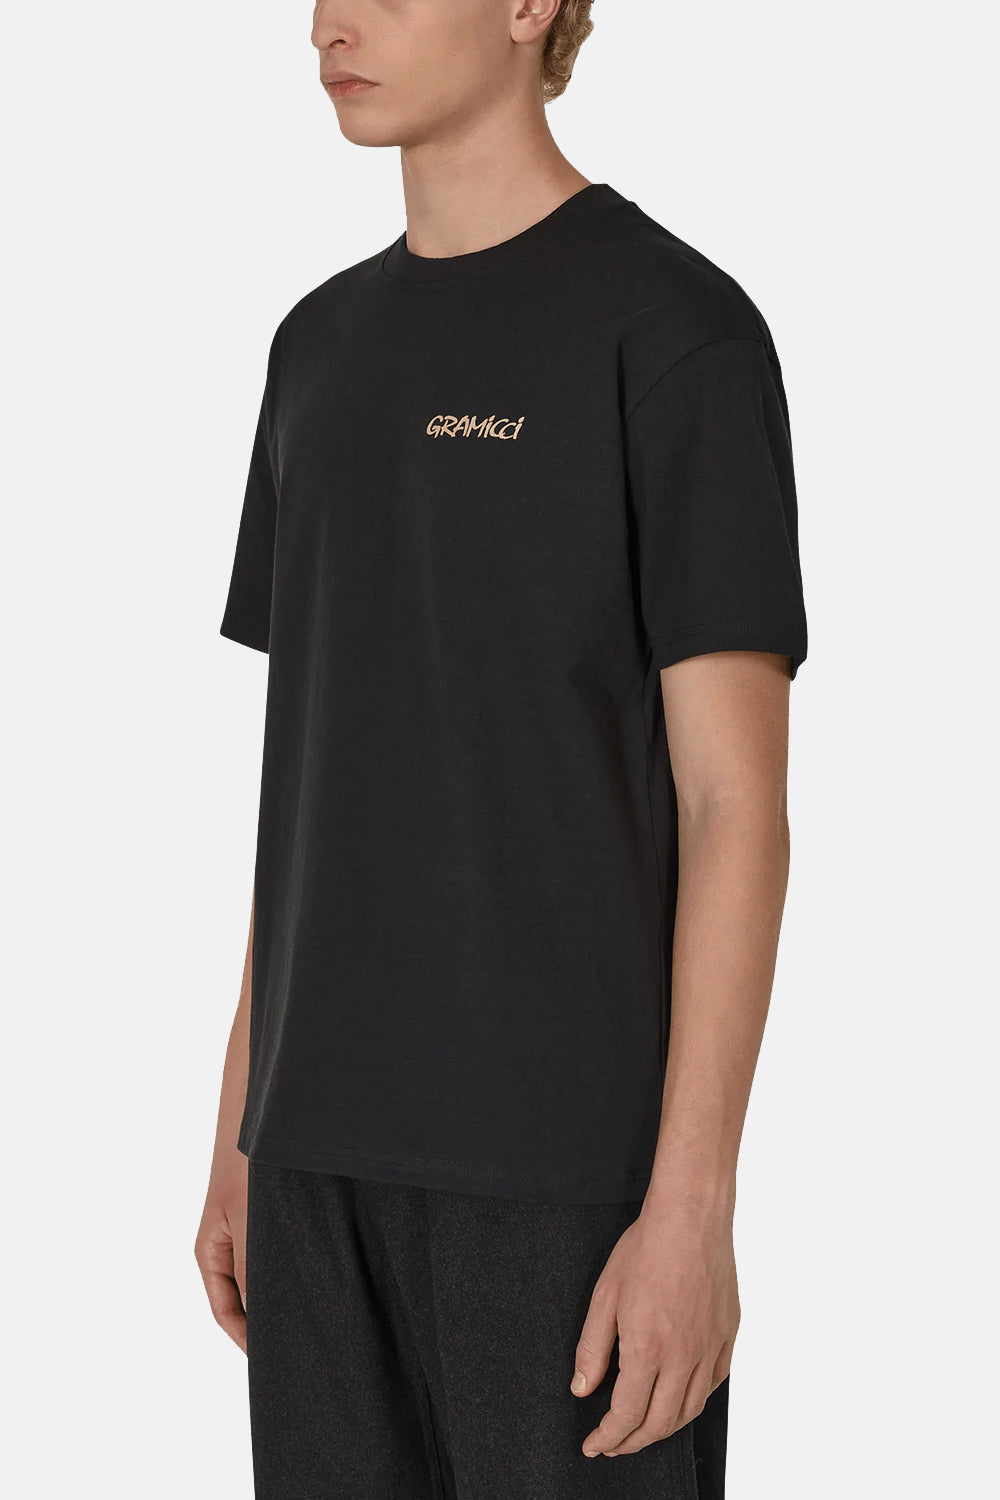 Gramicci Leaf T-Shirt (Black)